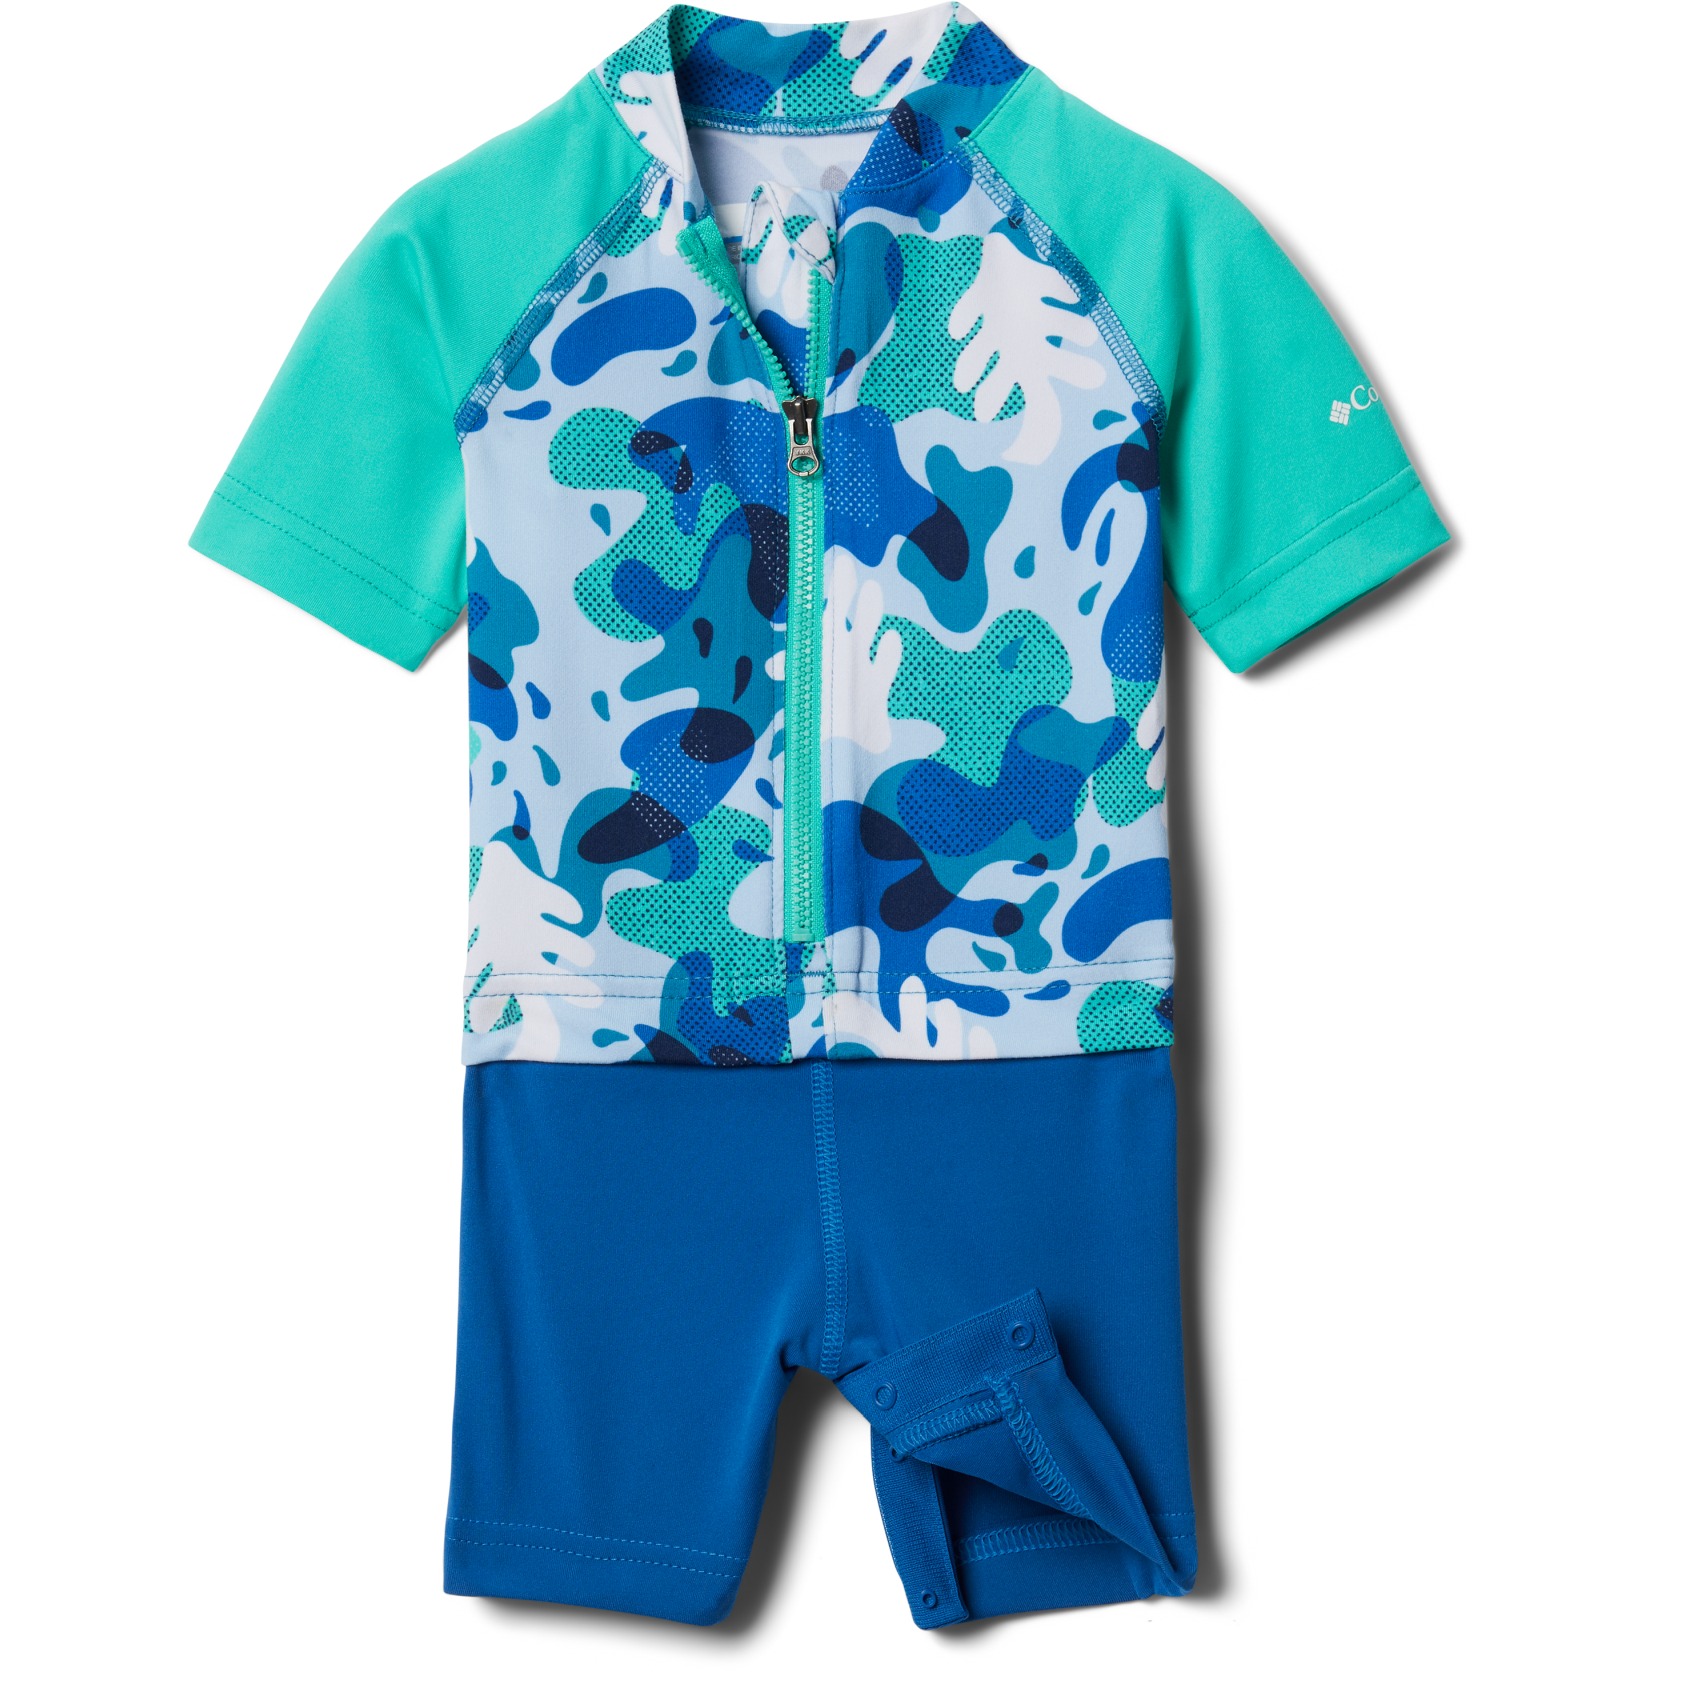 Picture of Columbia Sandy Shores Sunguard Suit Kids - Deep Marine Splash Camo, Electric Turquoise